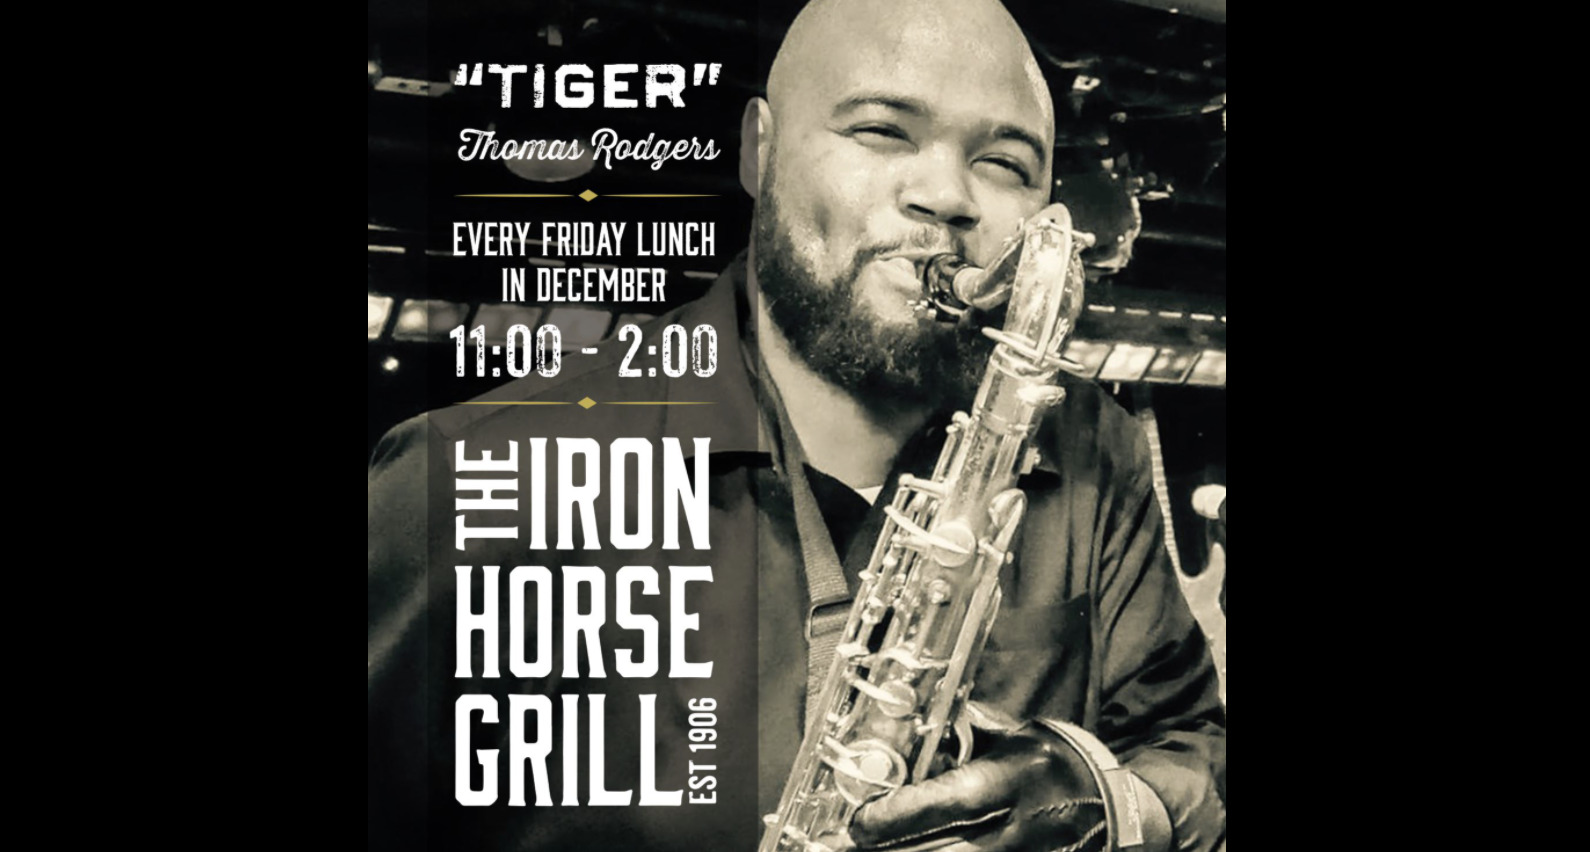 Holiday Jazz: “Tiger” Thomas Rodgers